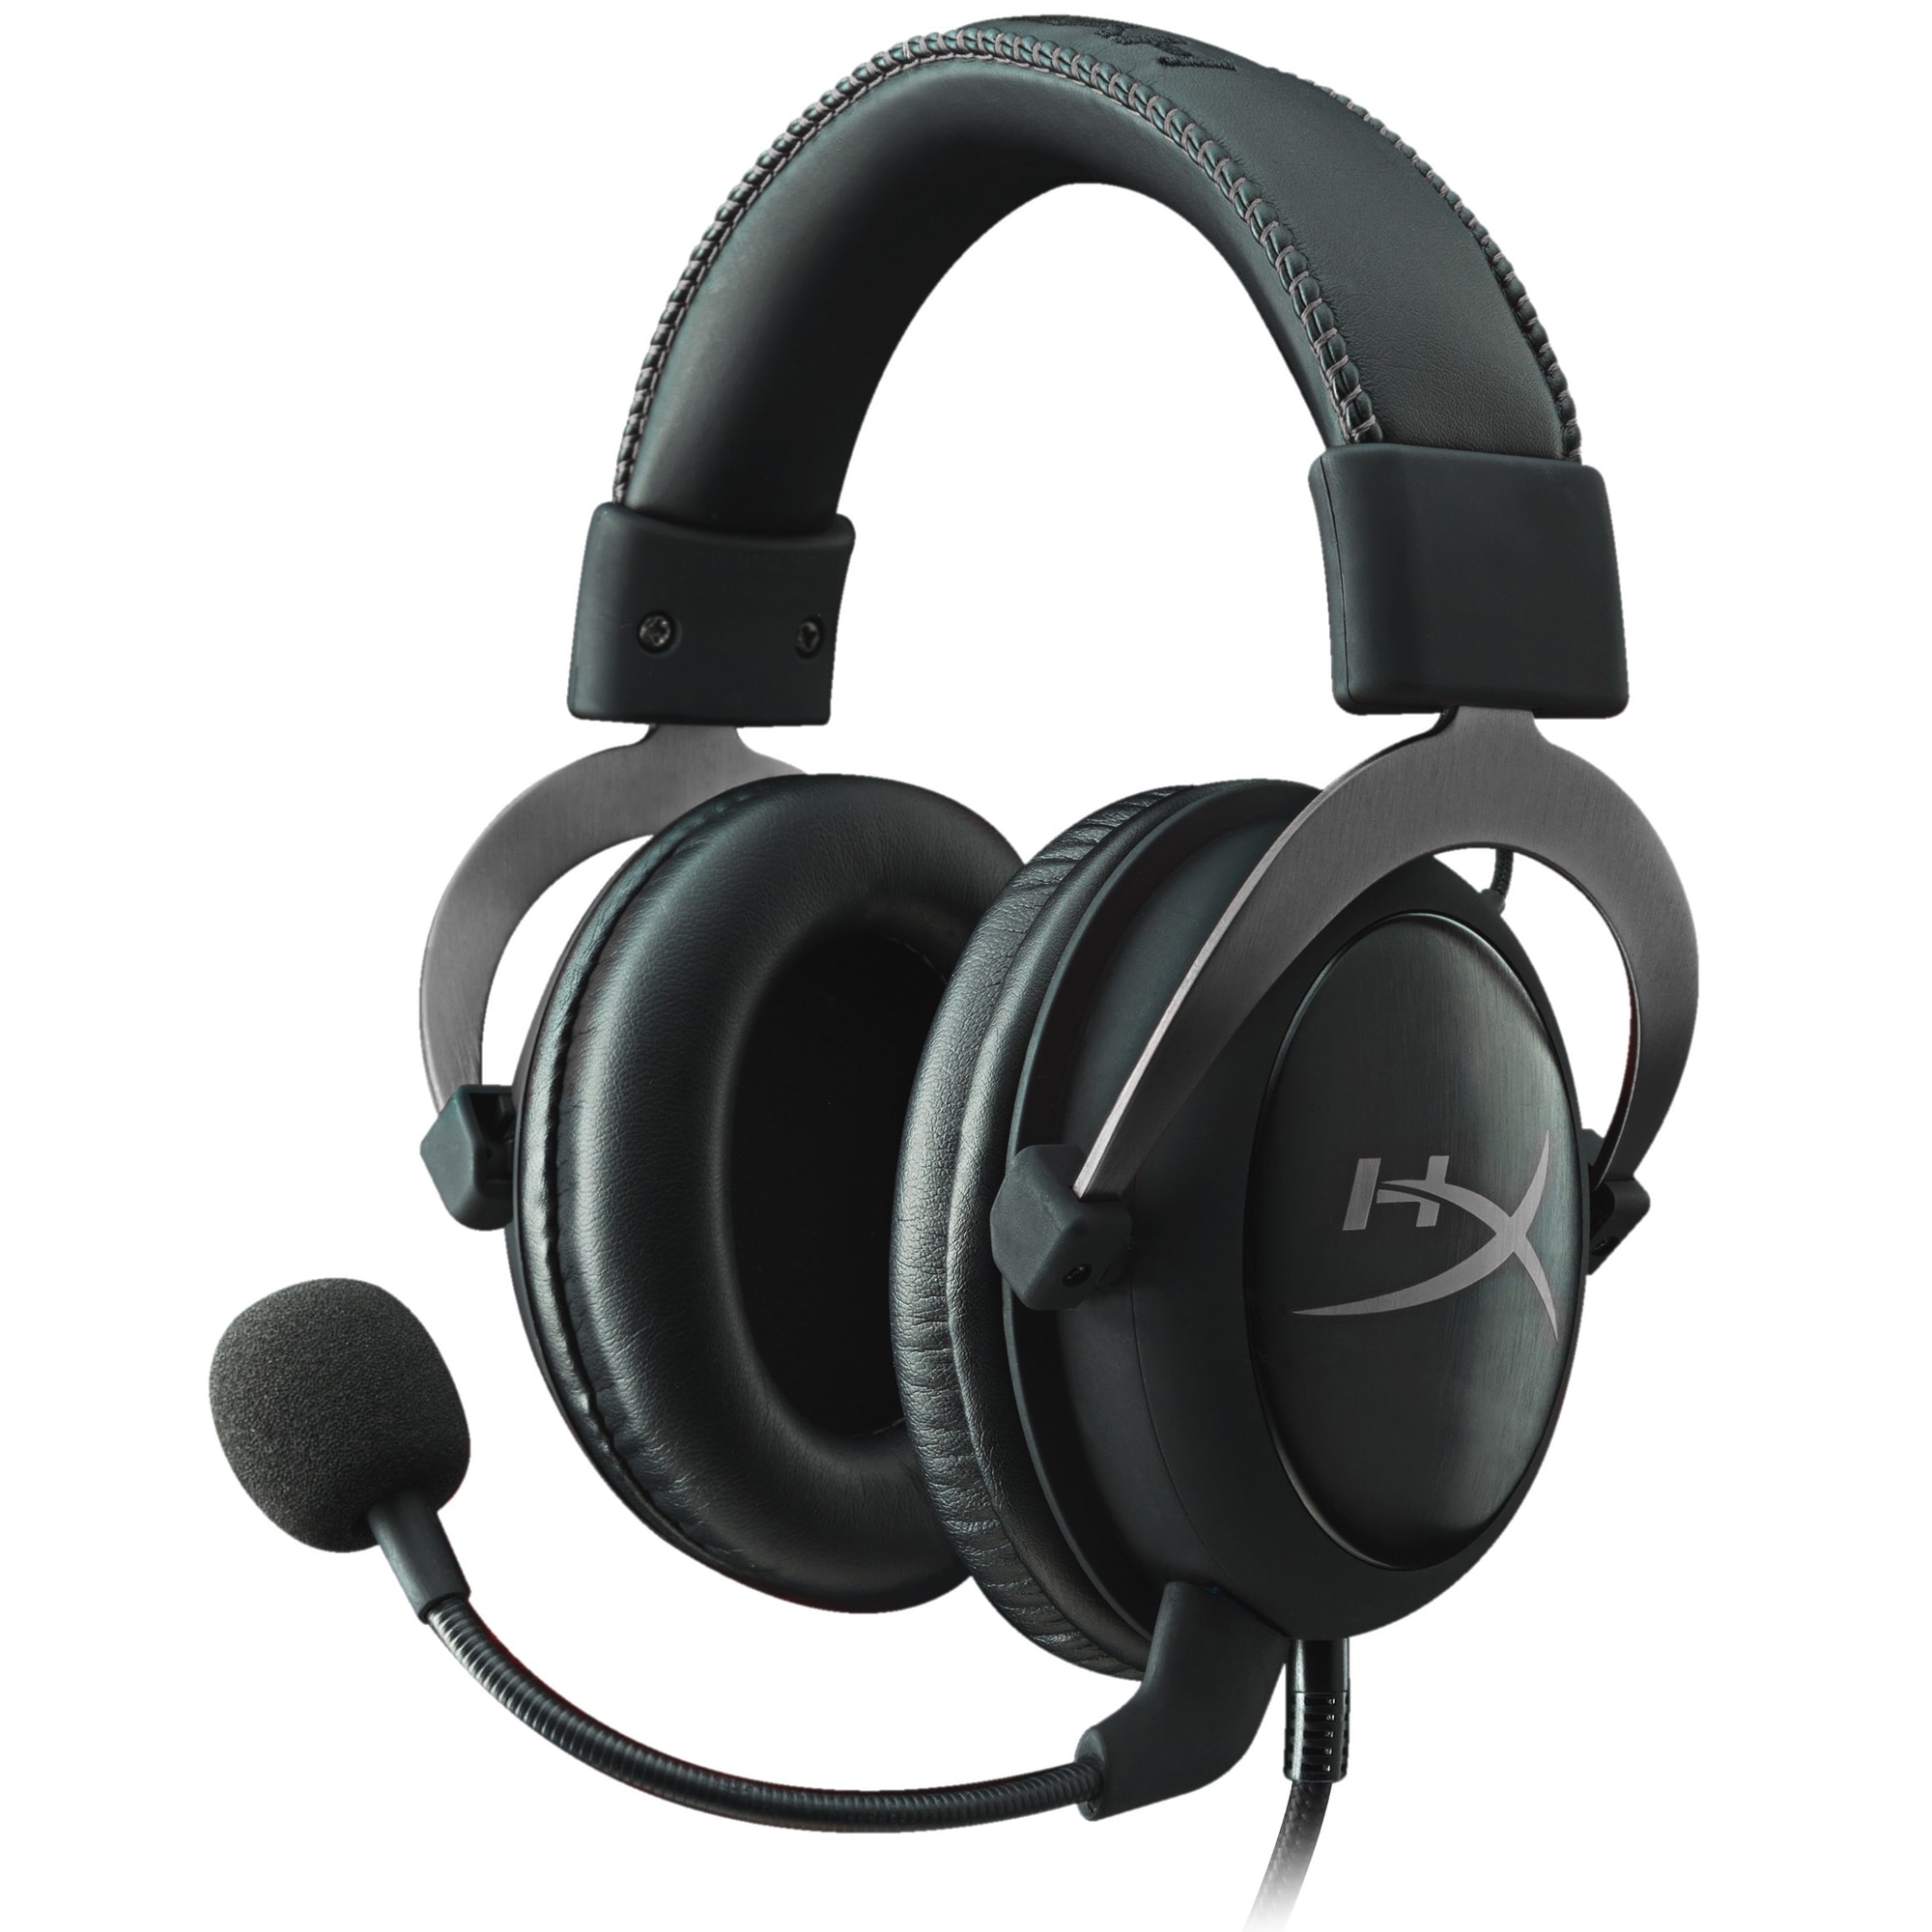 For en dagstur Pasture forsikring HyperX Cloud II gaming-headset - grå | Elgiganten